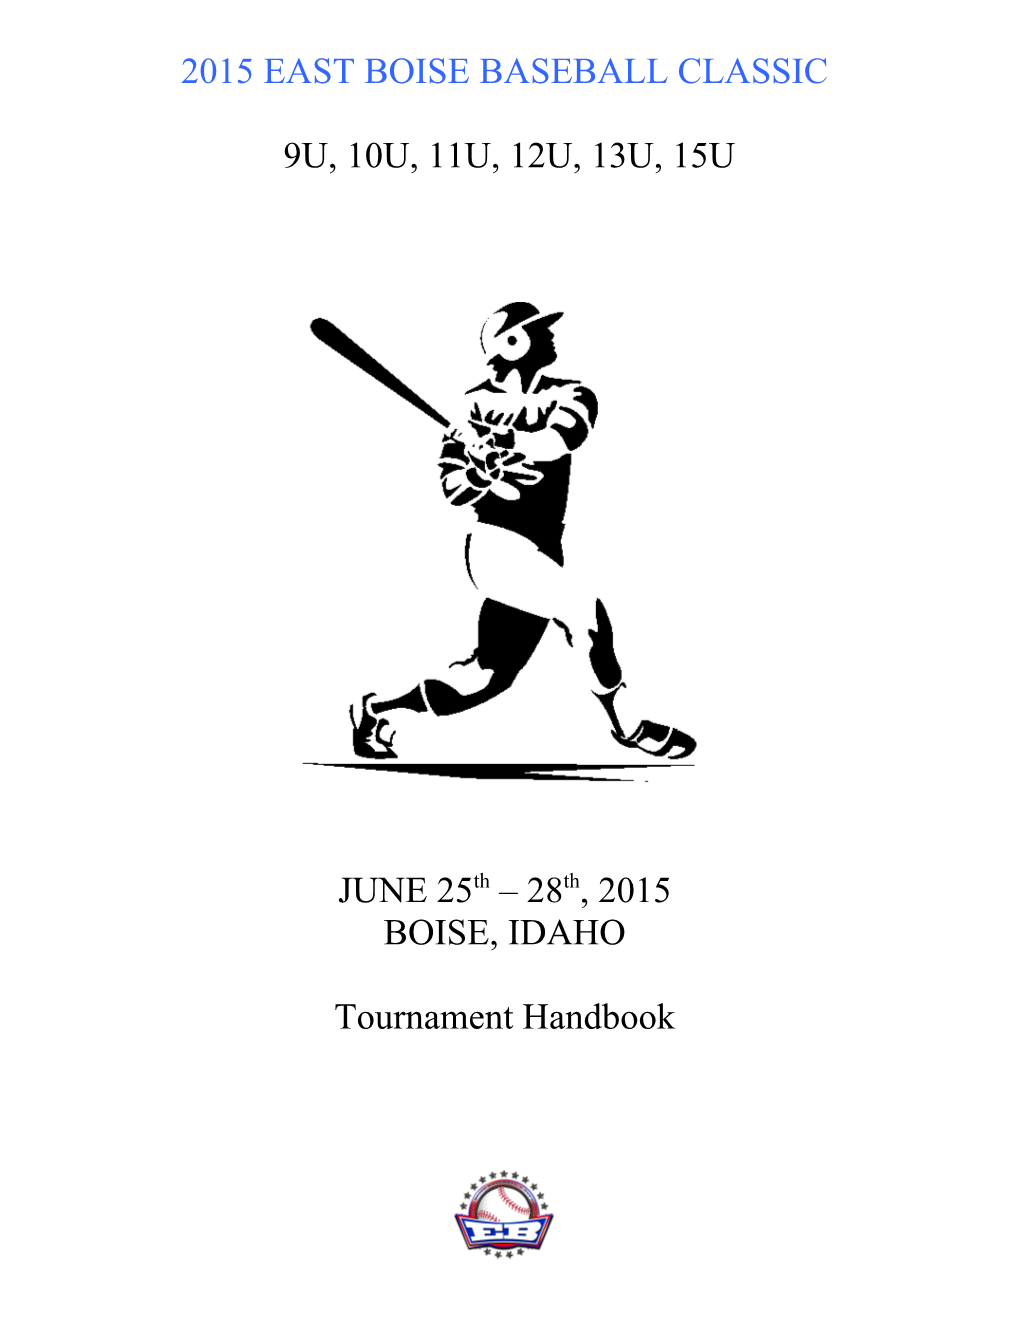 2009 East Boise Baseball Classic